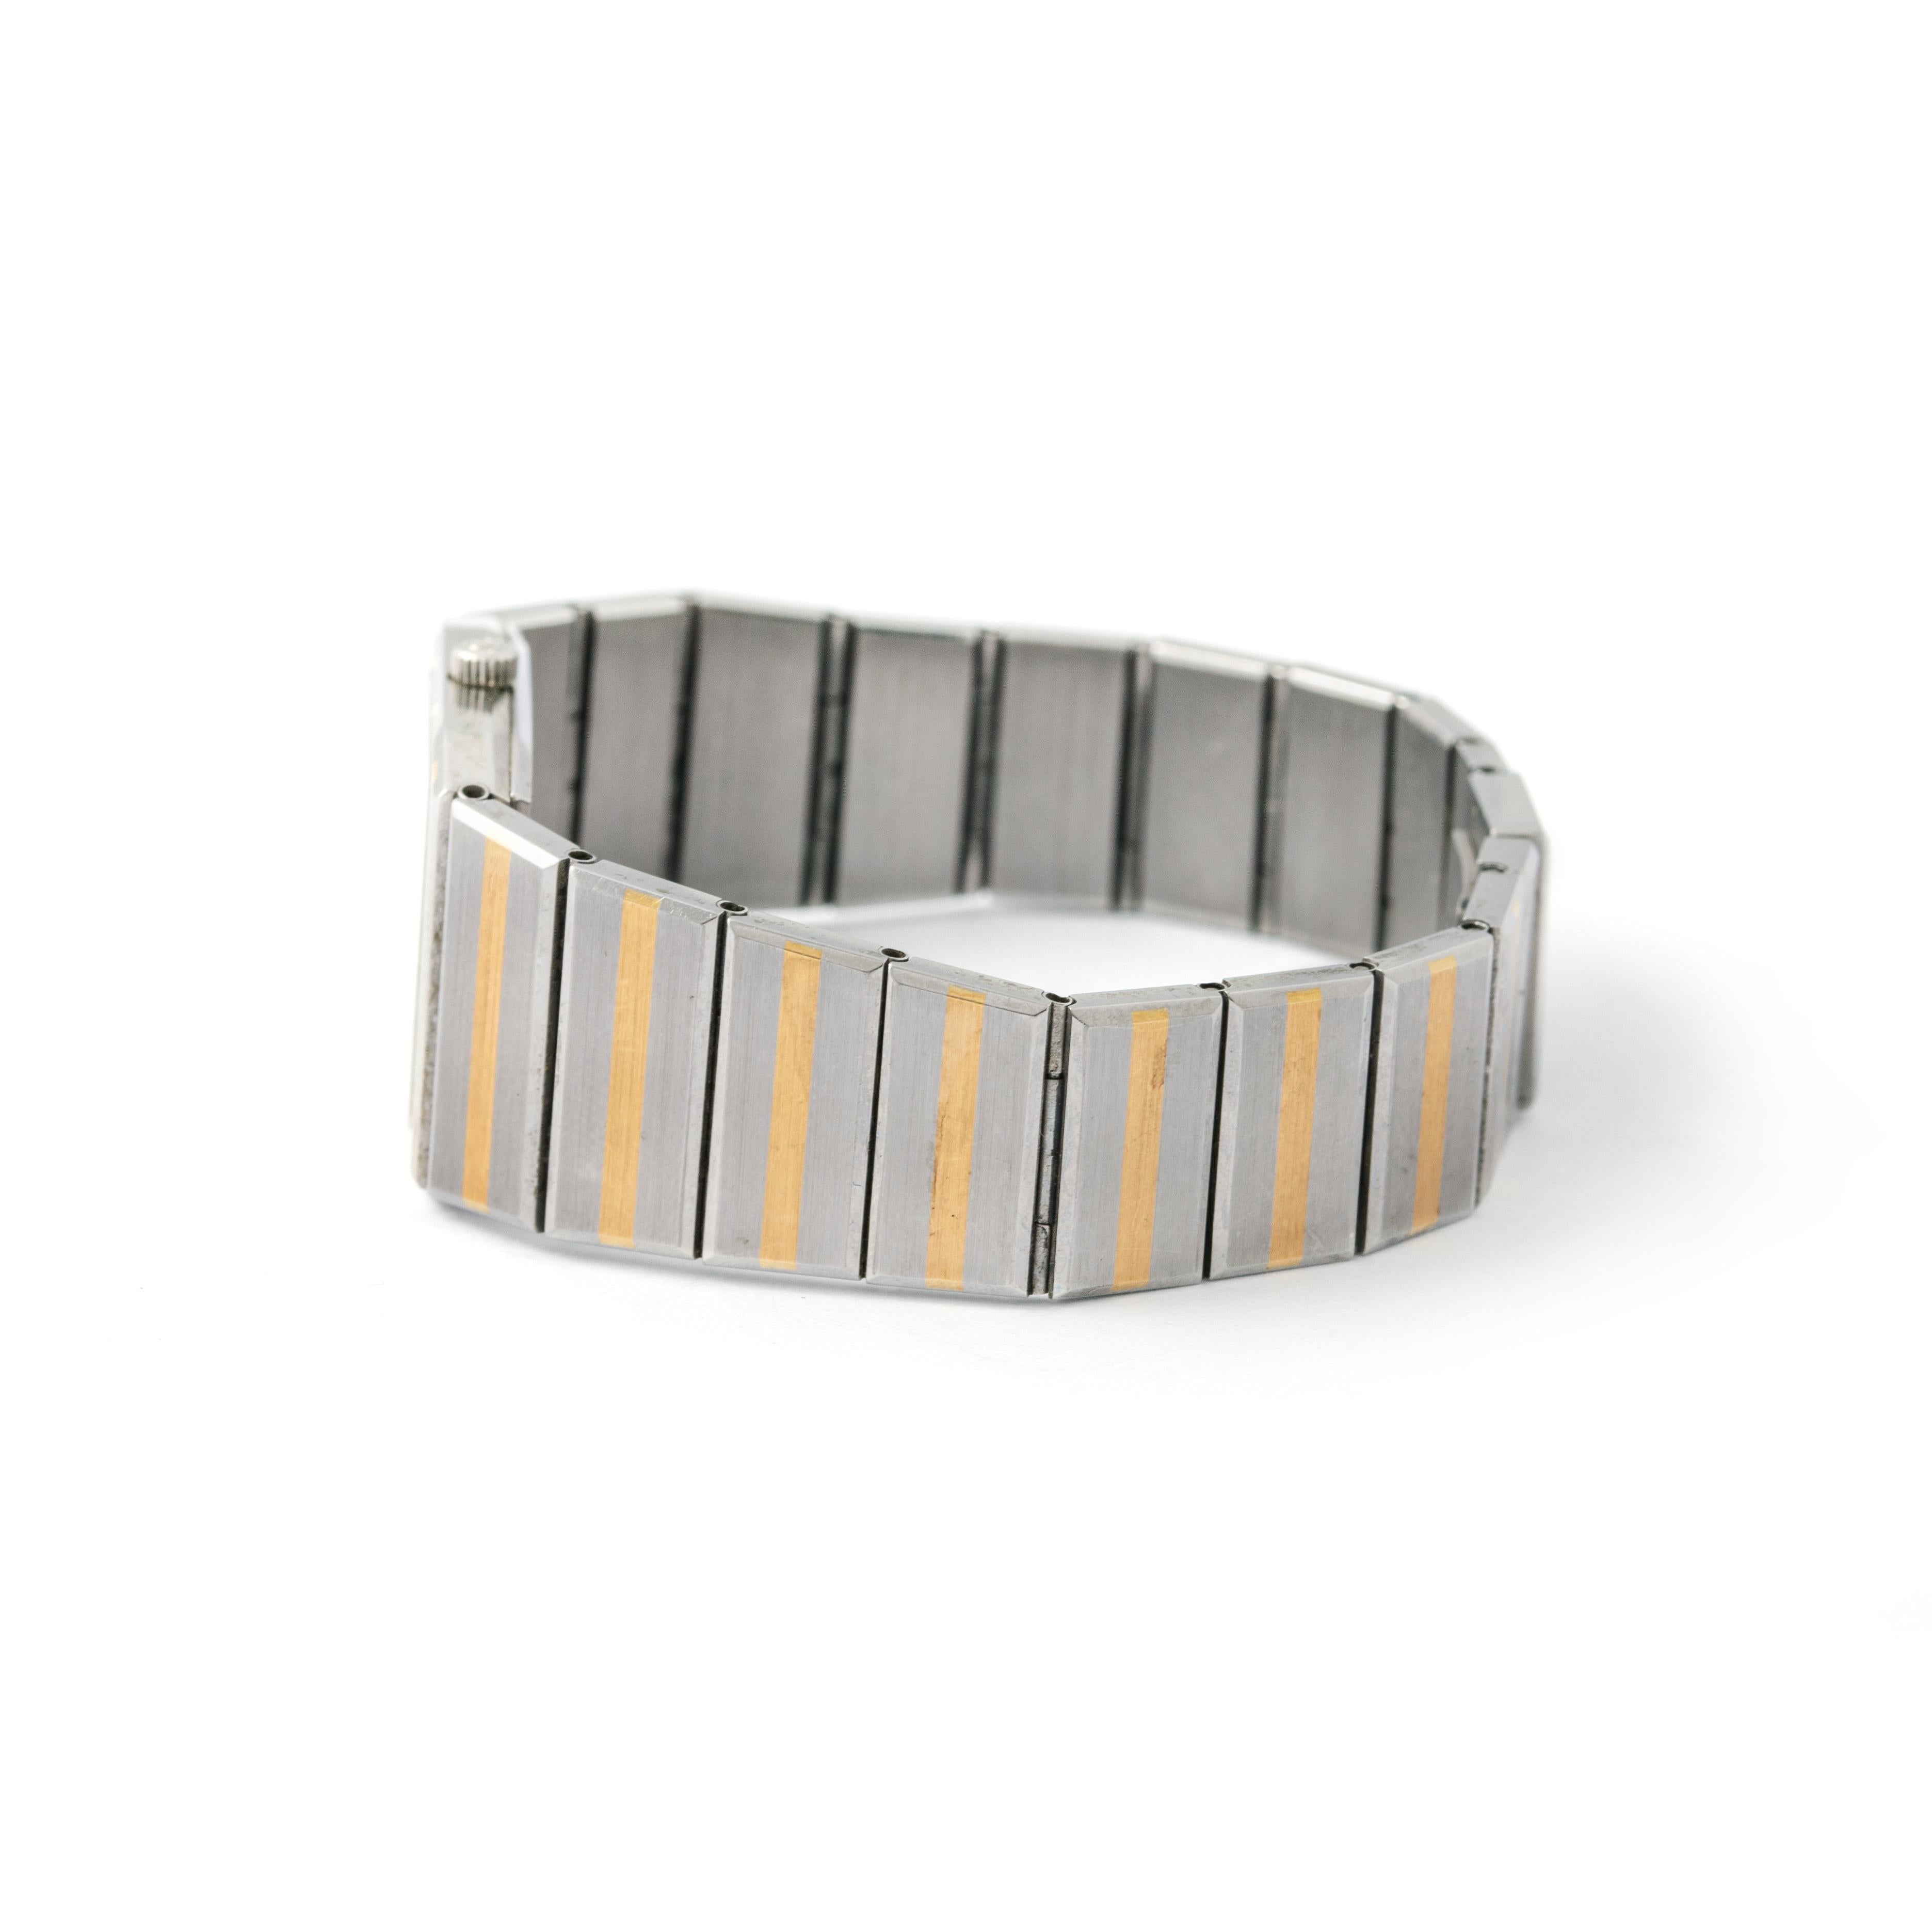 Baume & Mercier Classique Monte Carlo Stainless Steel Wristwatch For Sale 1